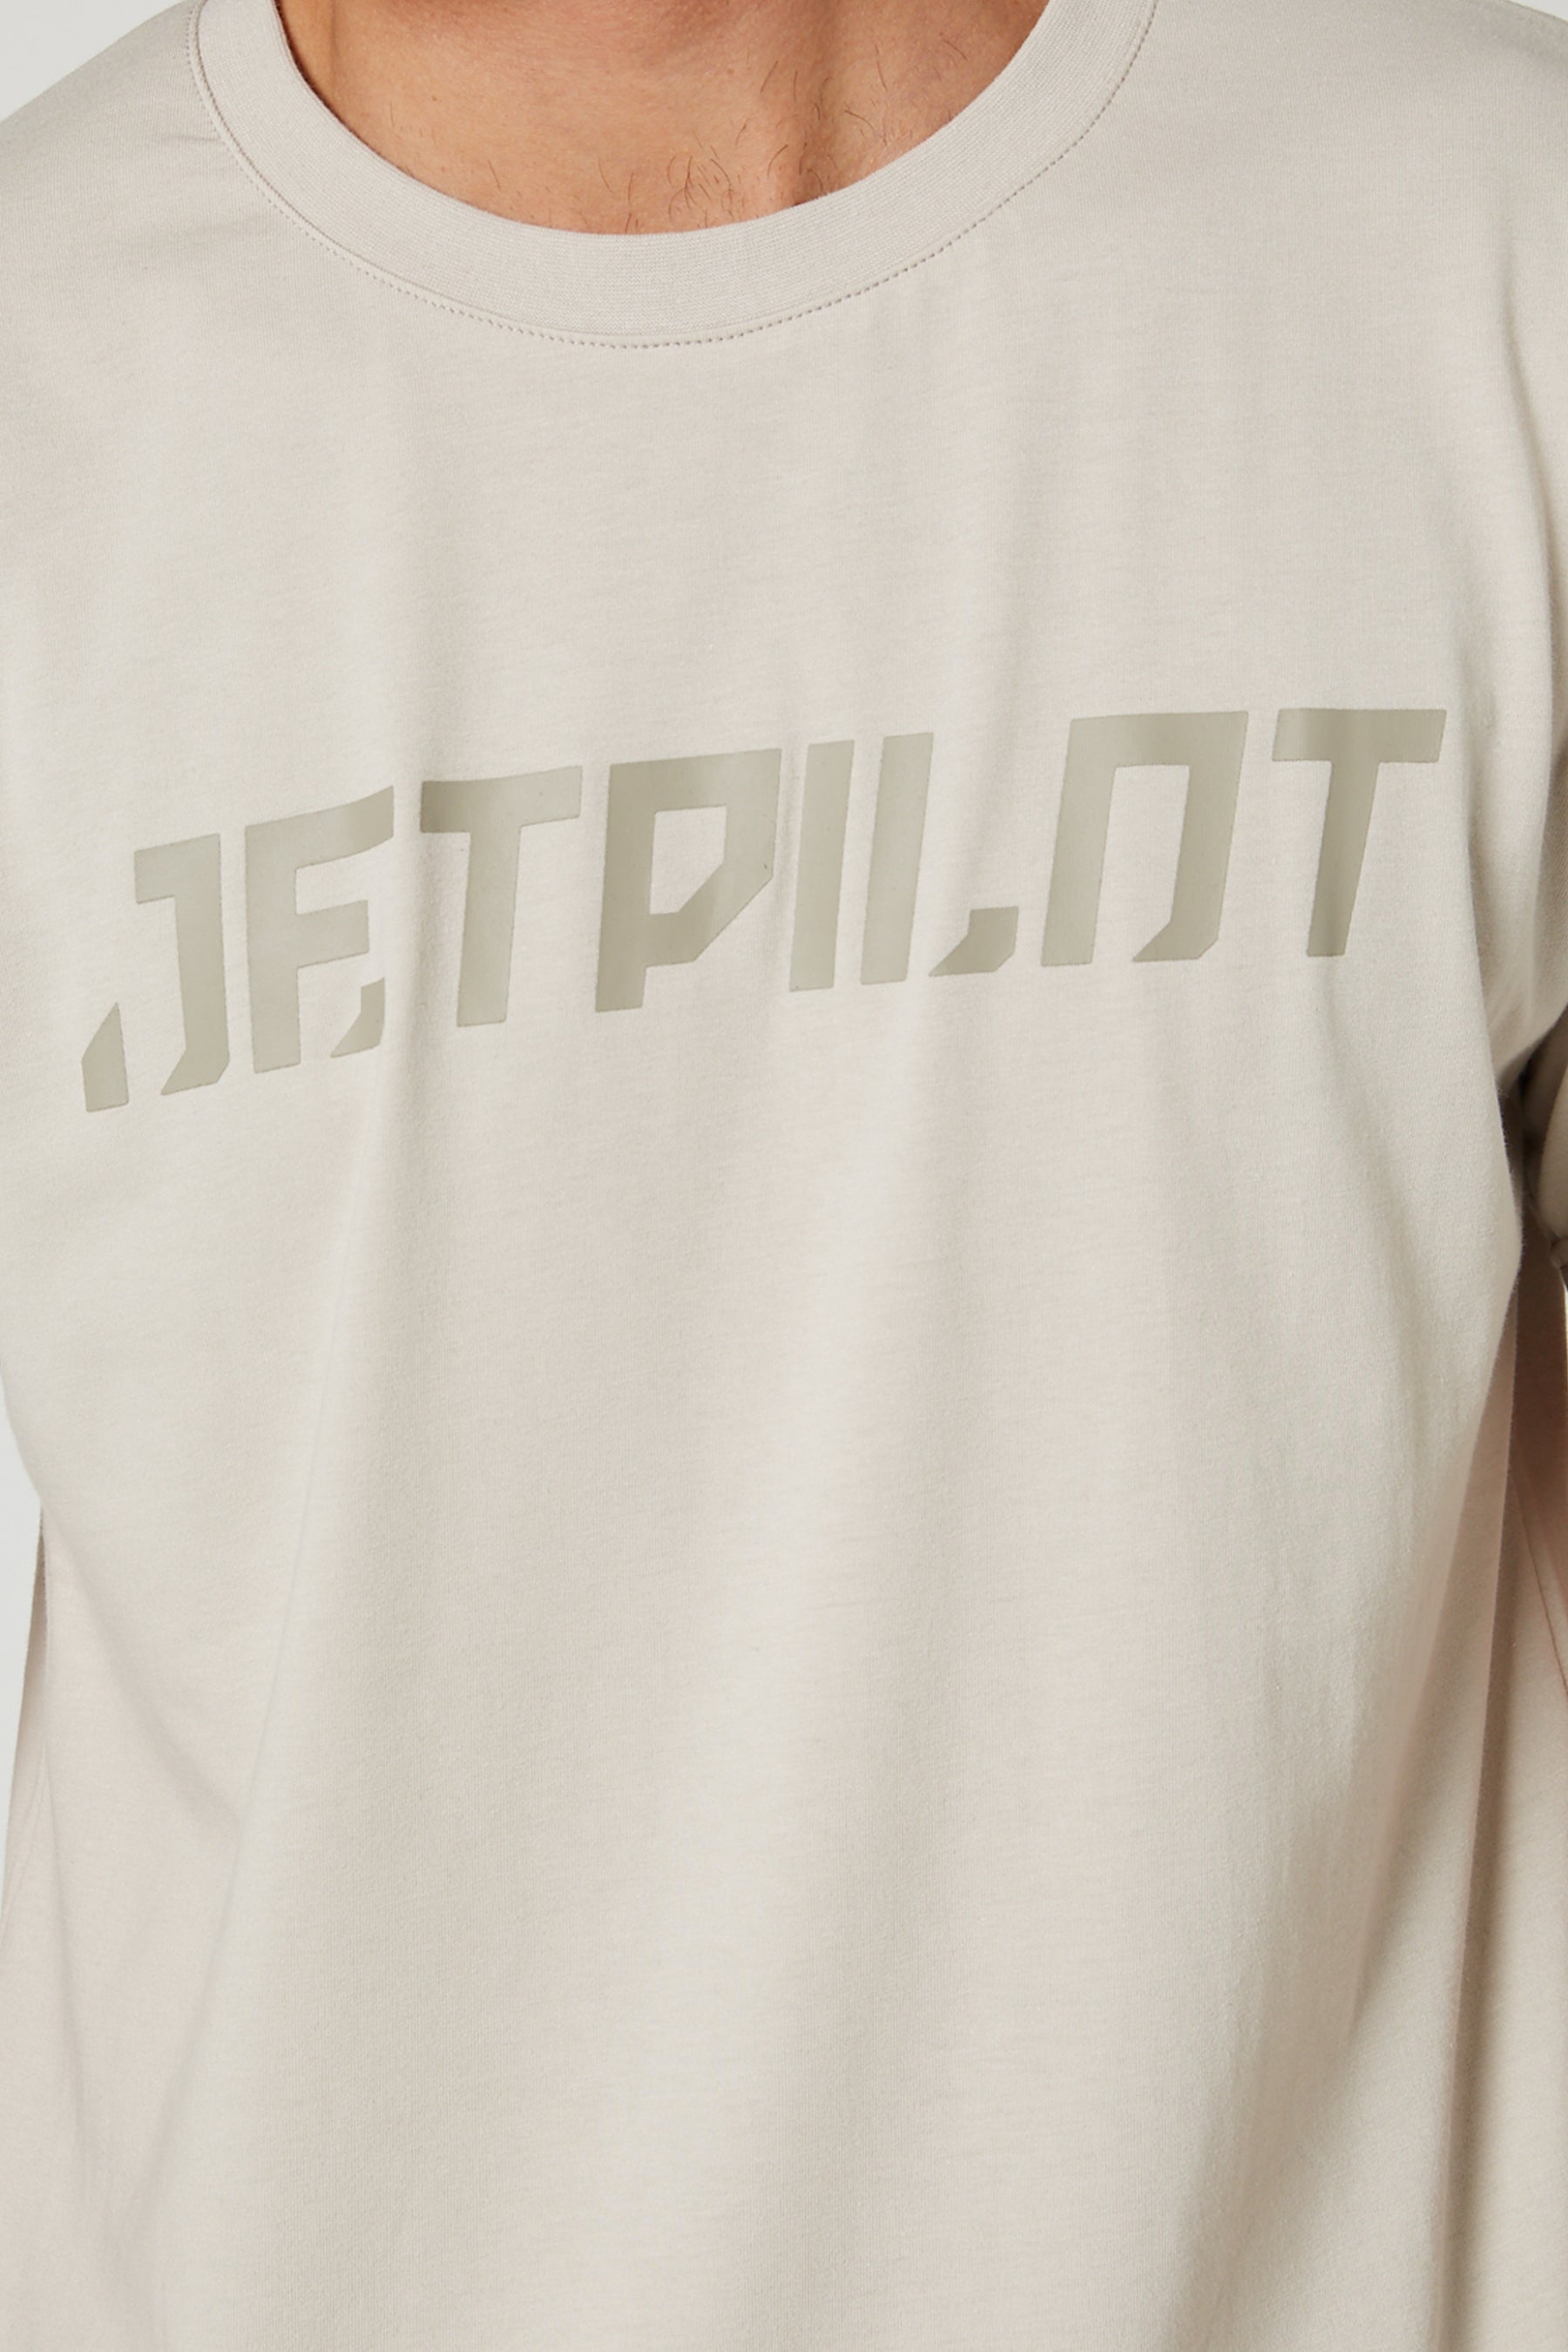 Jetpilot Corp Mens Tee - Putty